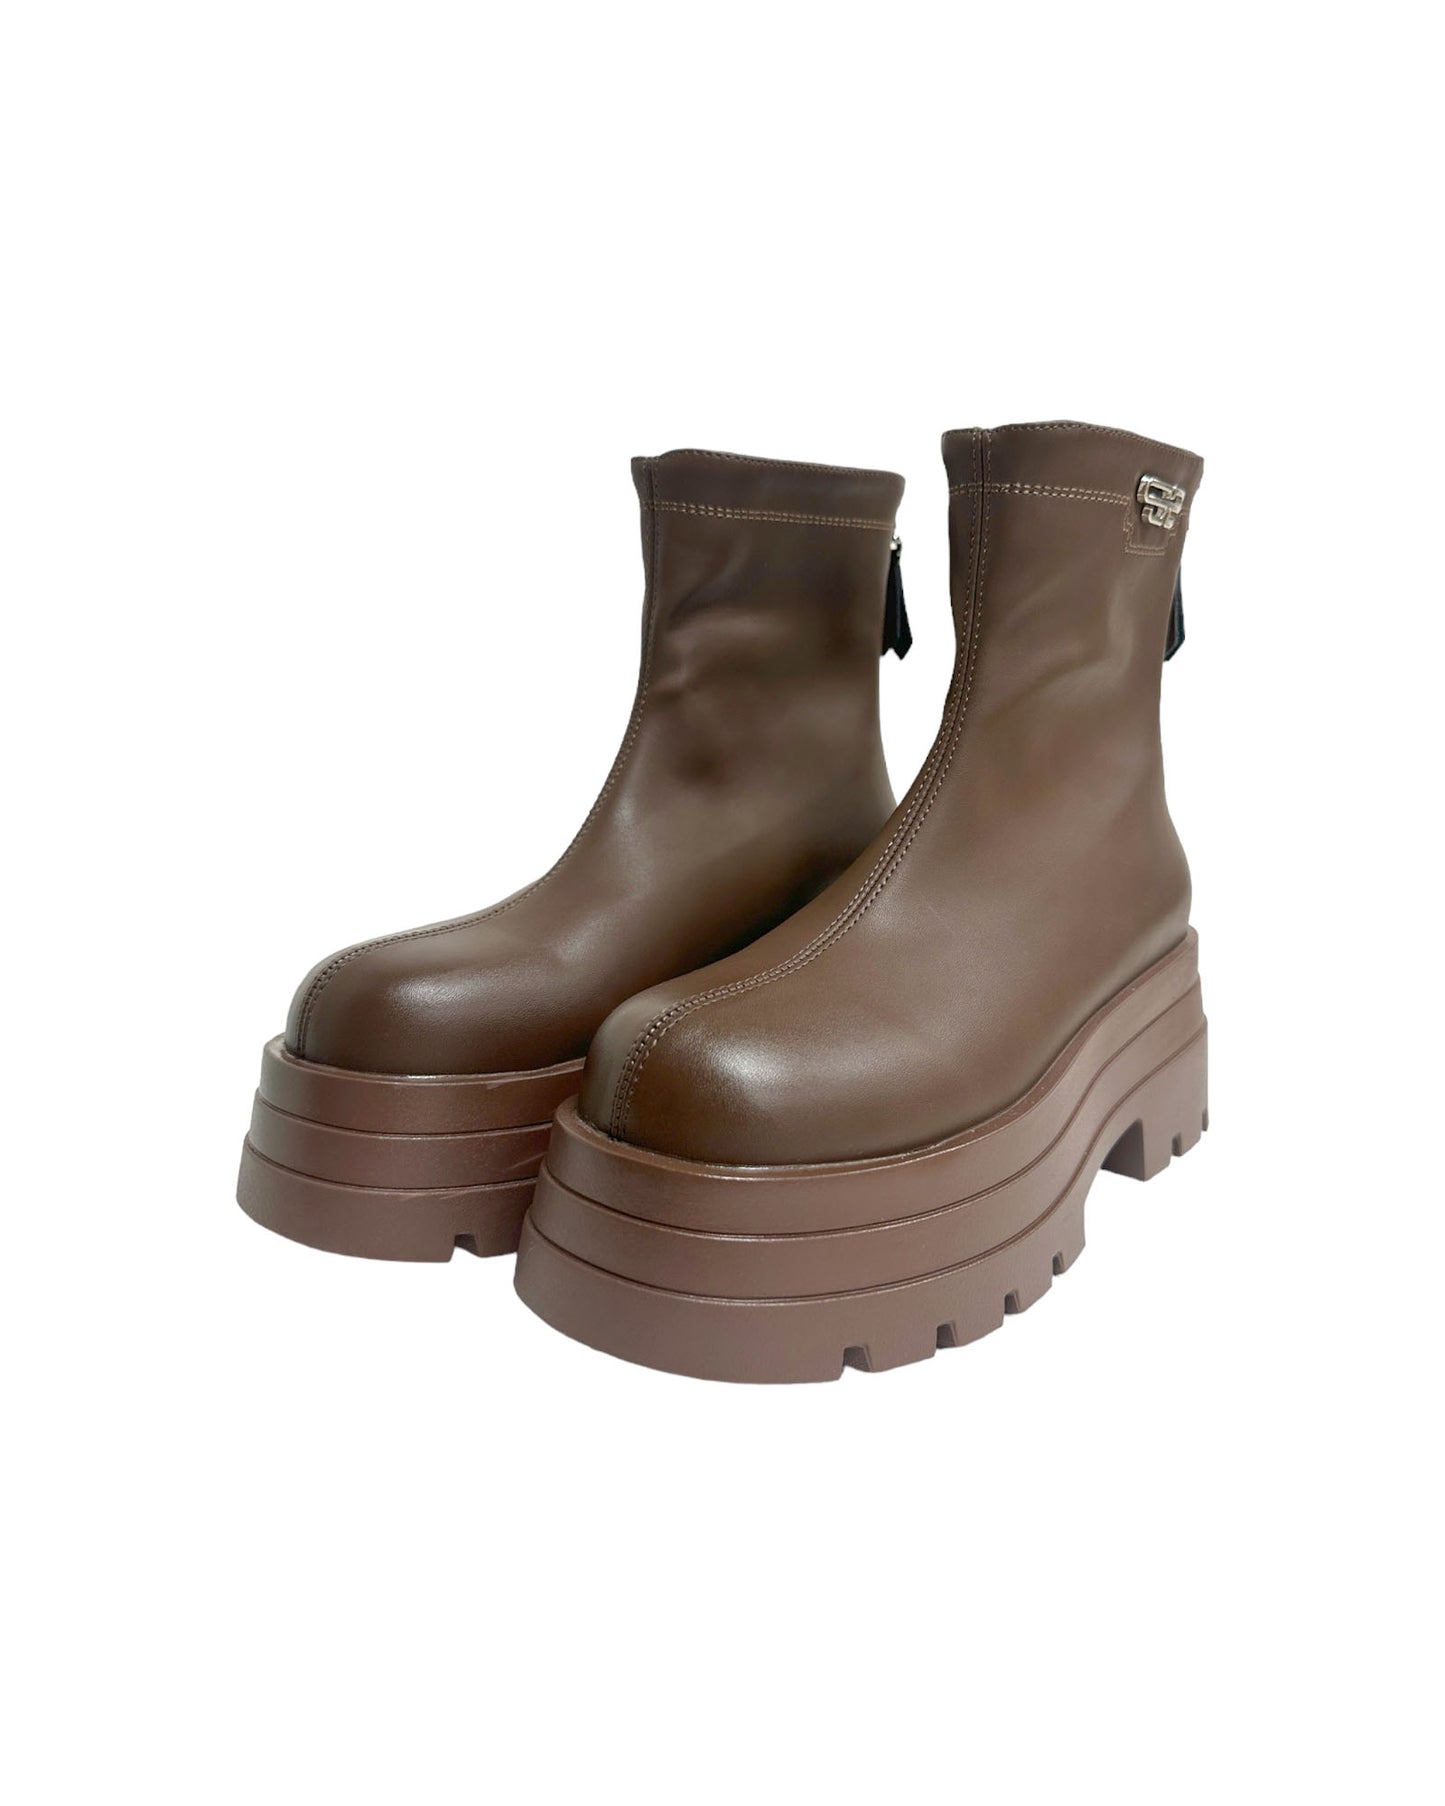 brown flatform PU leather boots - 37